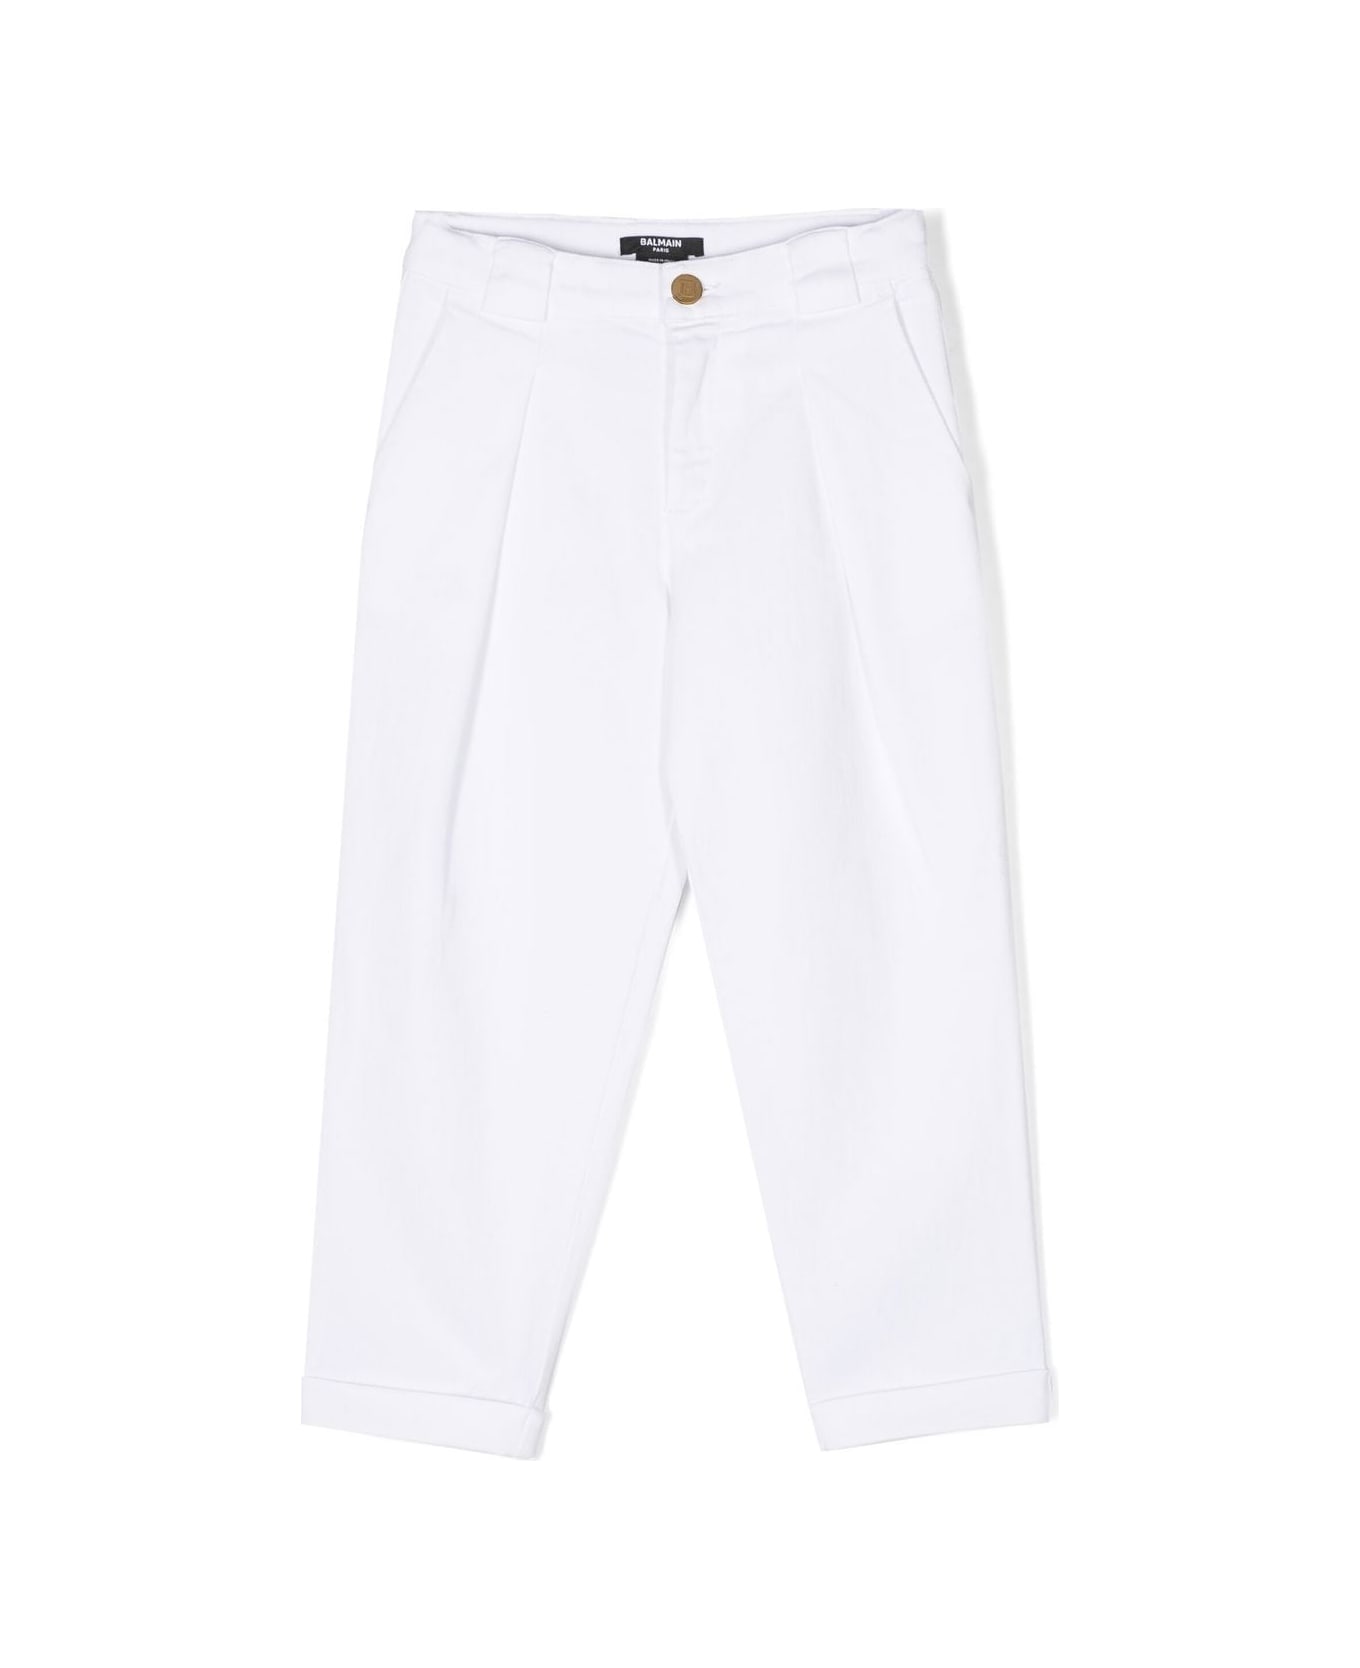 Balmain White Cotton Pants - White ボトムス